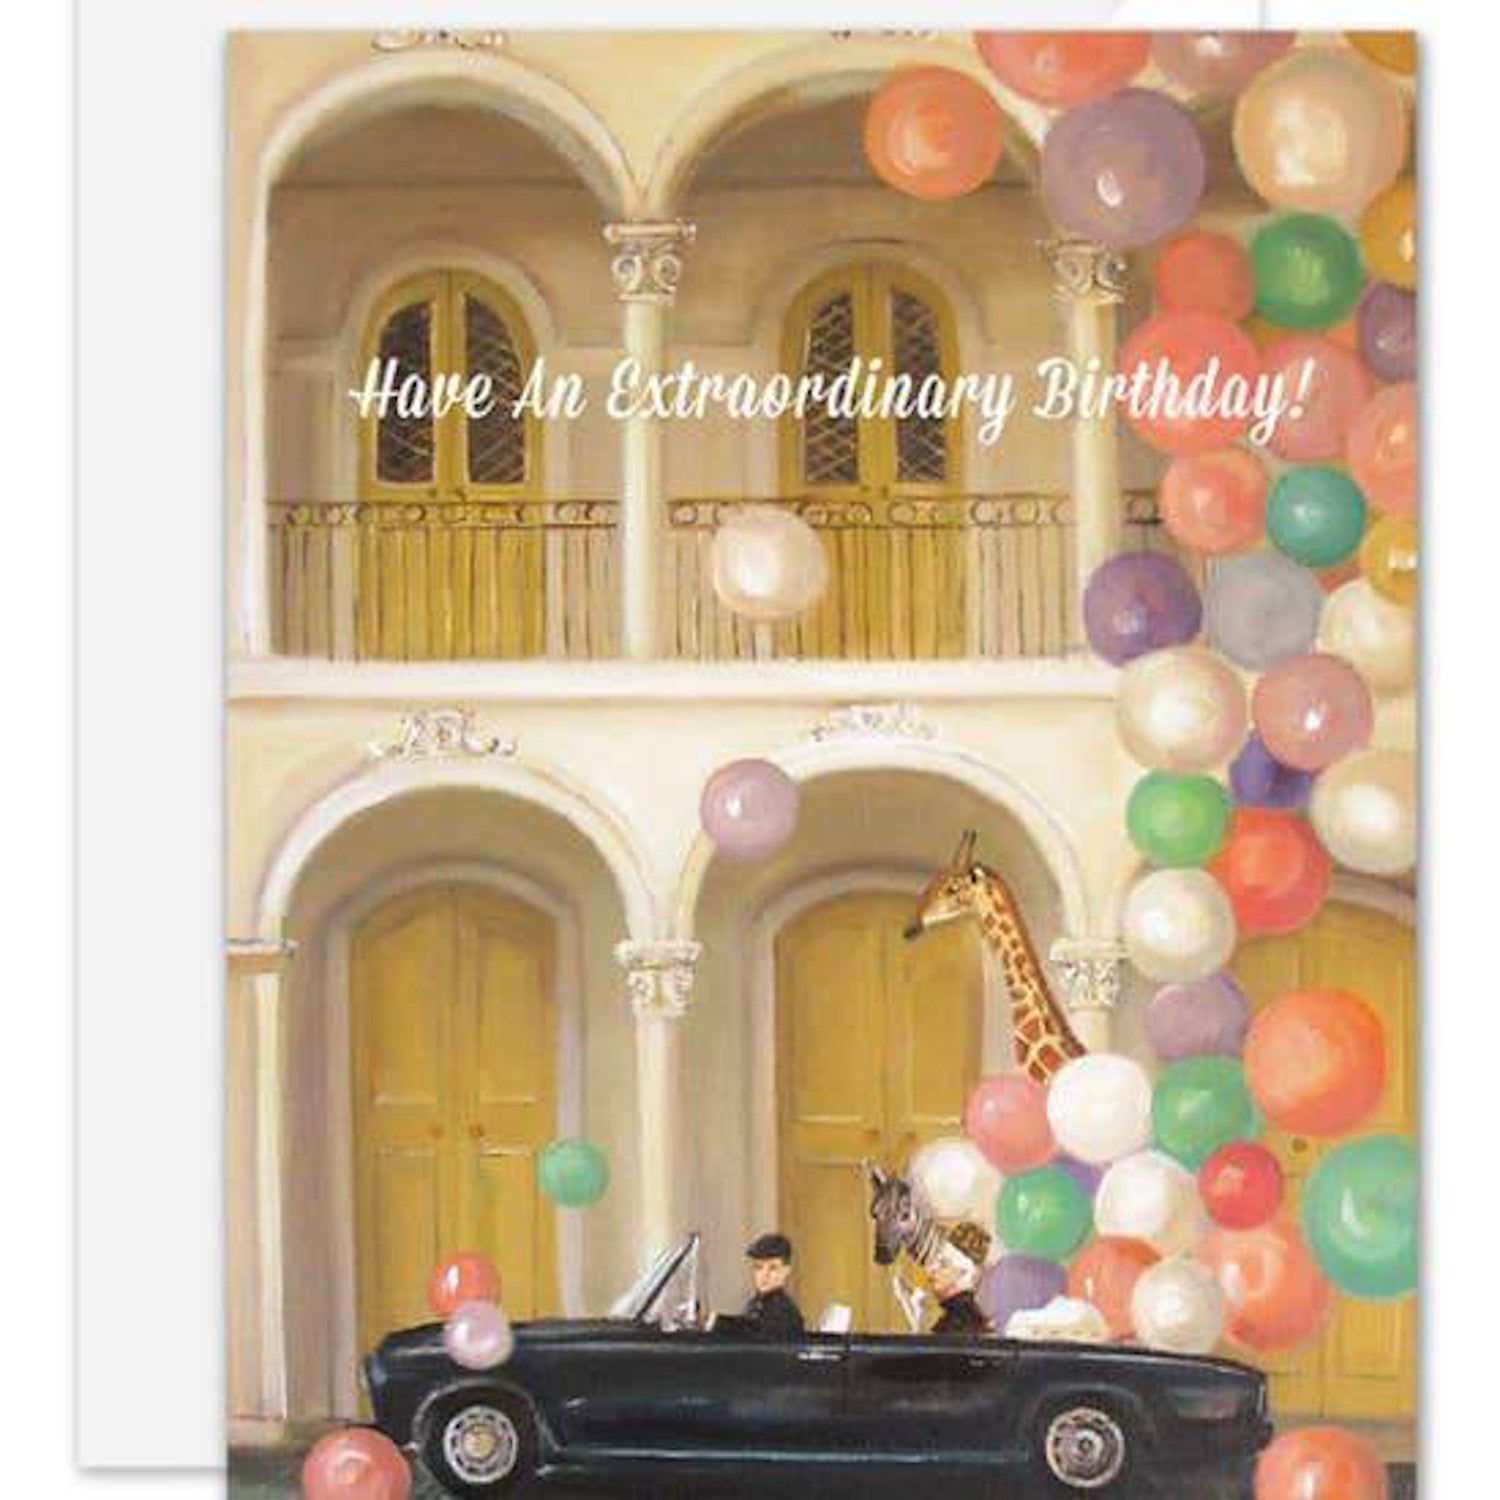 Have an Extraordinary Birthday Card